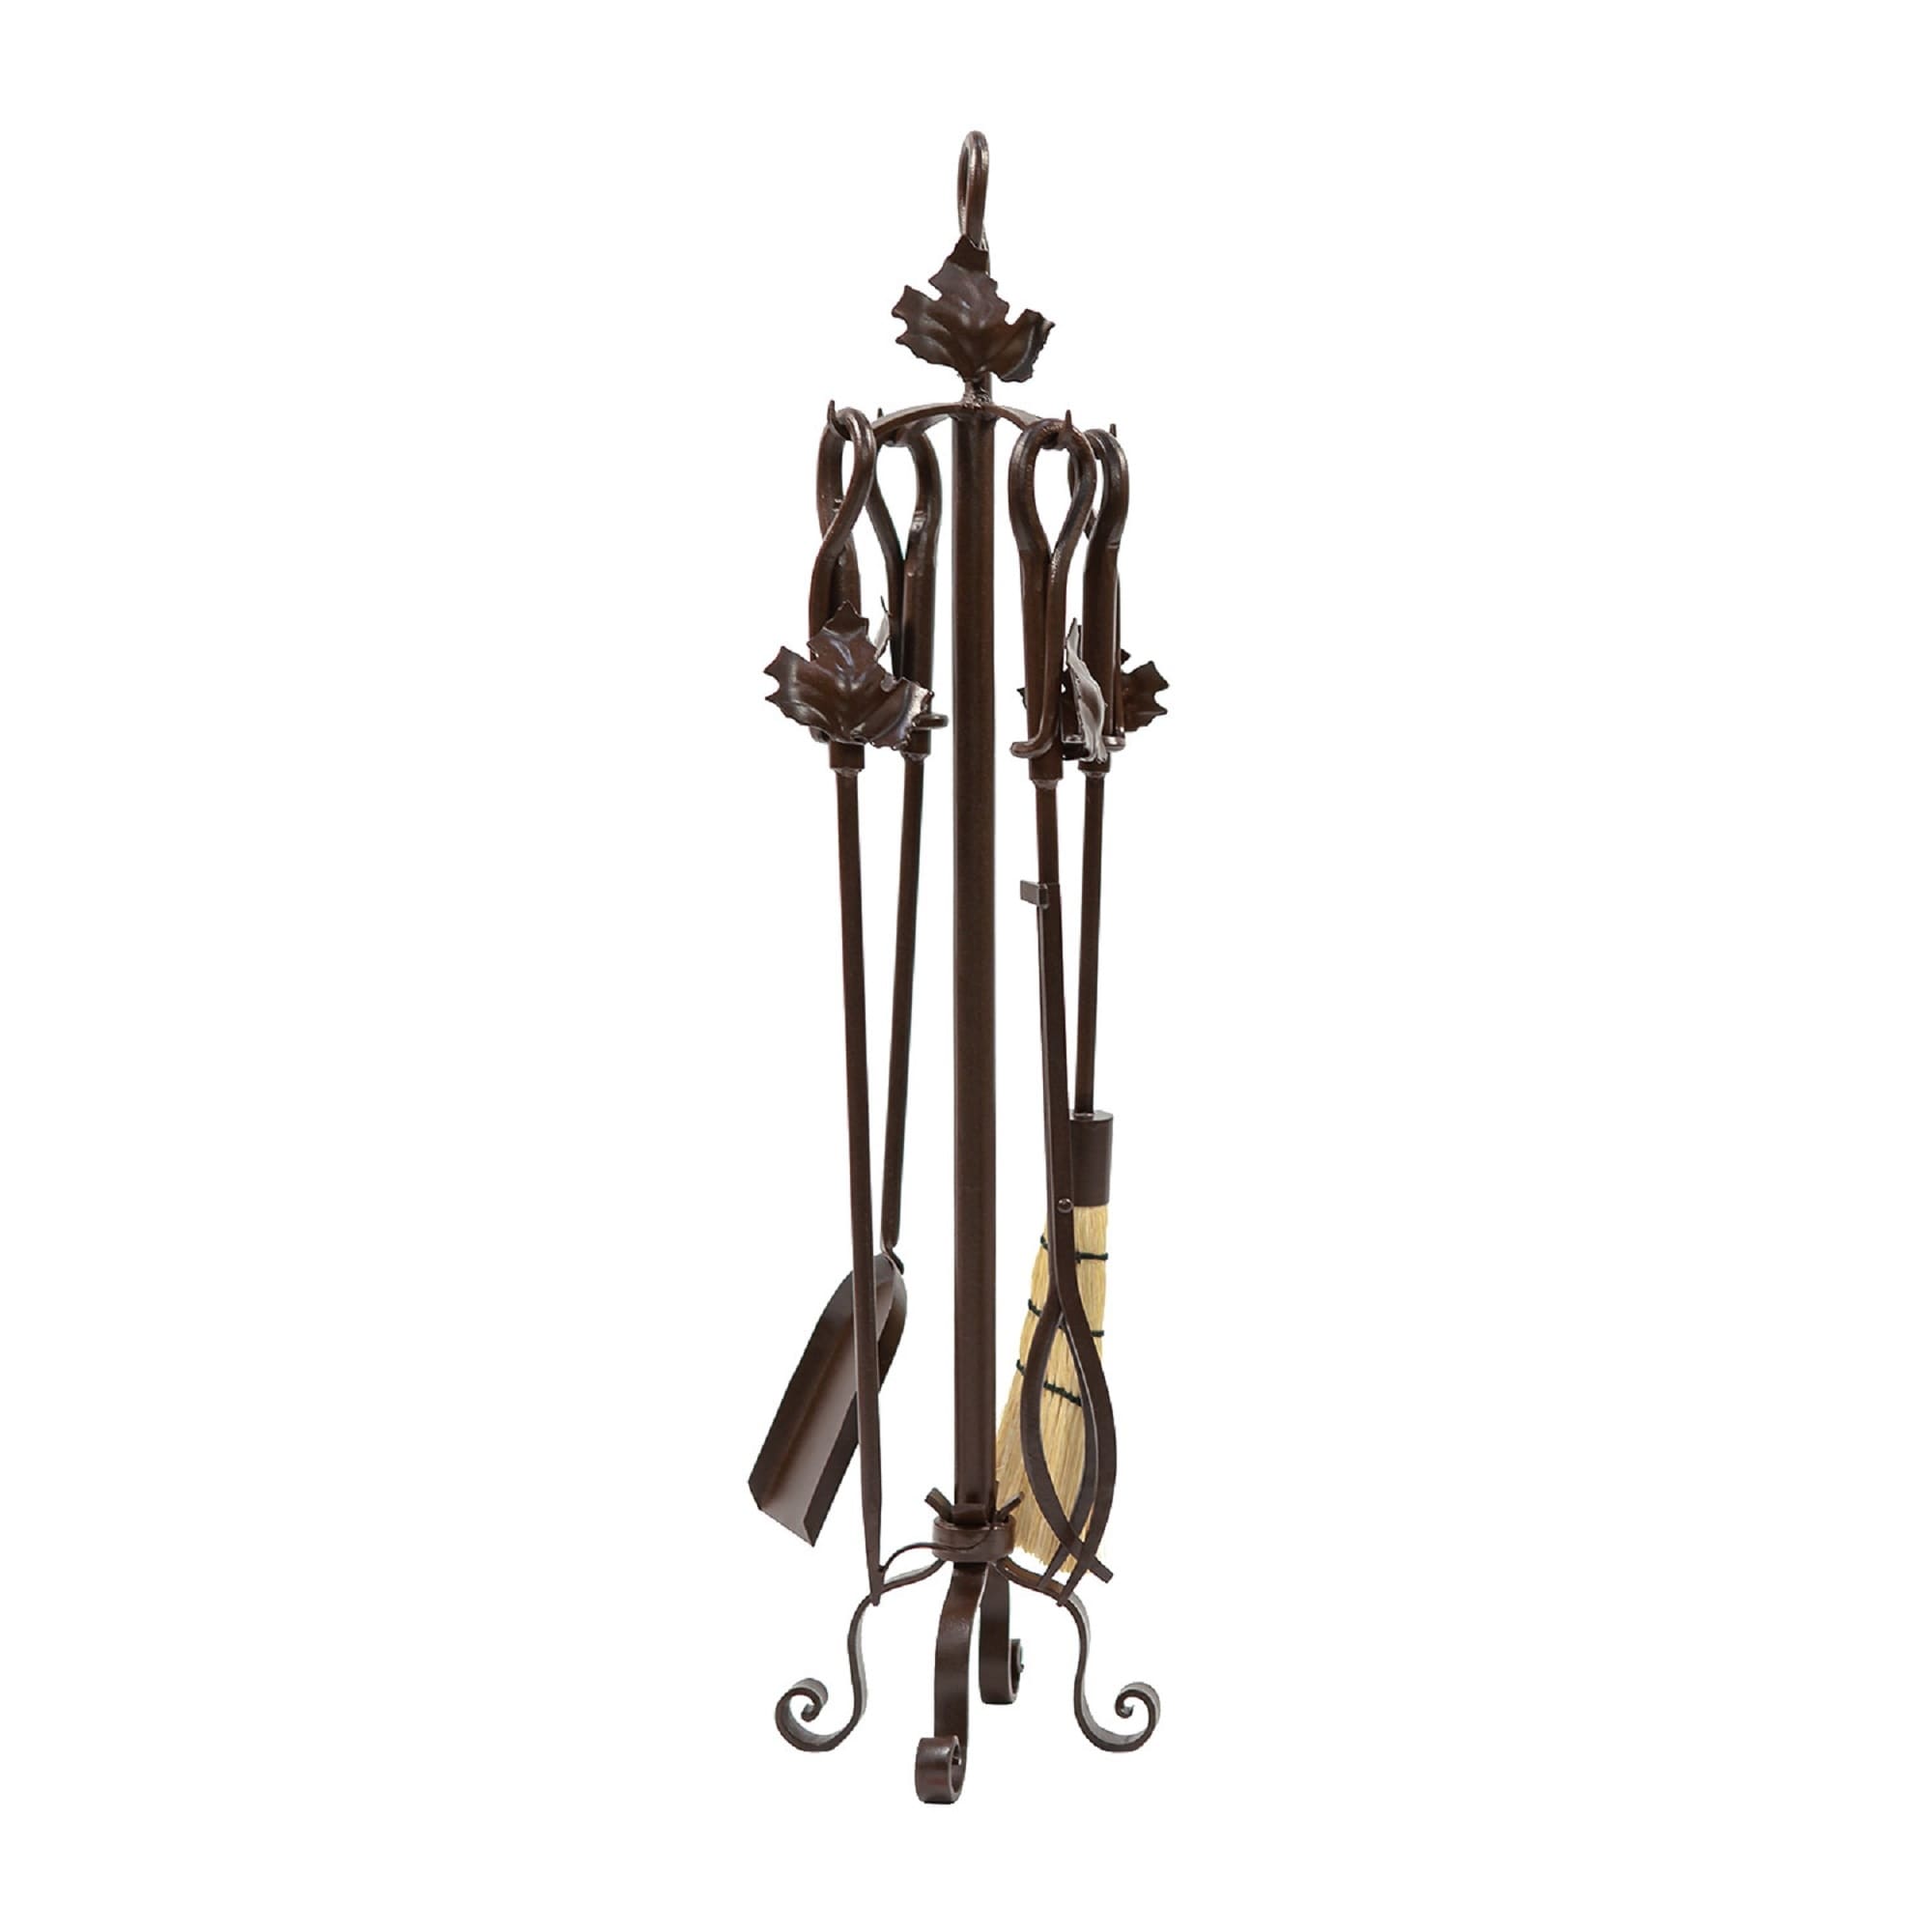 Minuteman International Maple Leaf Fireplace Set of 4 Tools, 35 Inch Tall, Roman Bronze Finish